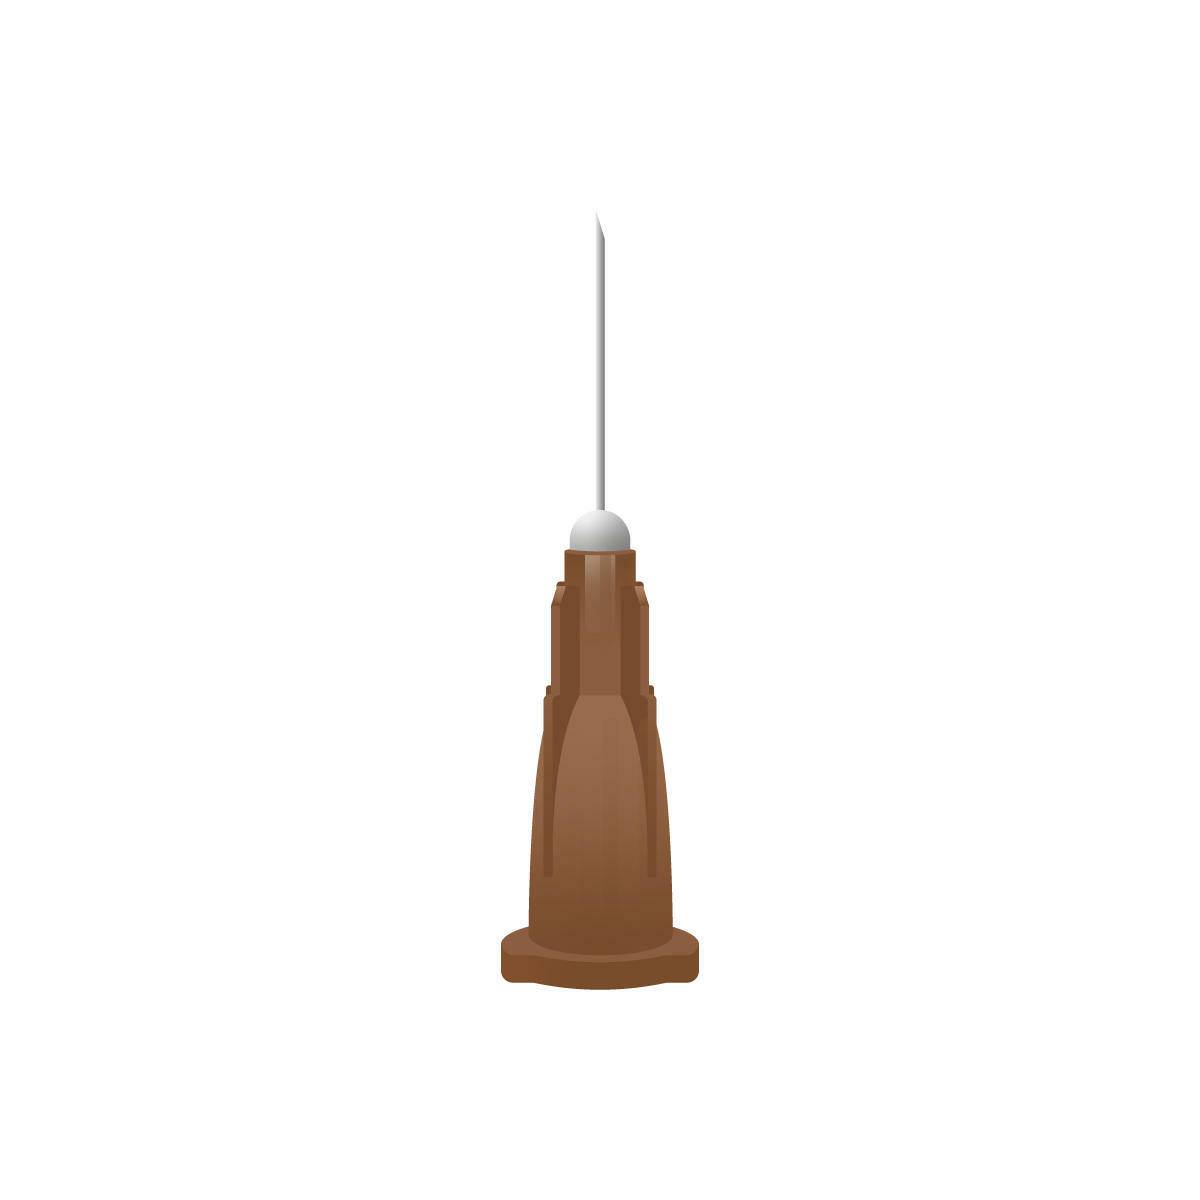 26g Brown 1/2 inch BD Microlance Needles (13mm x 0.45mm) - UKMEDI